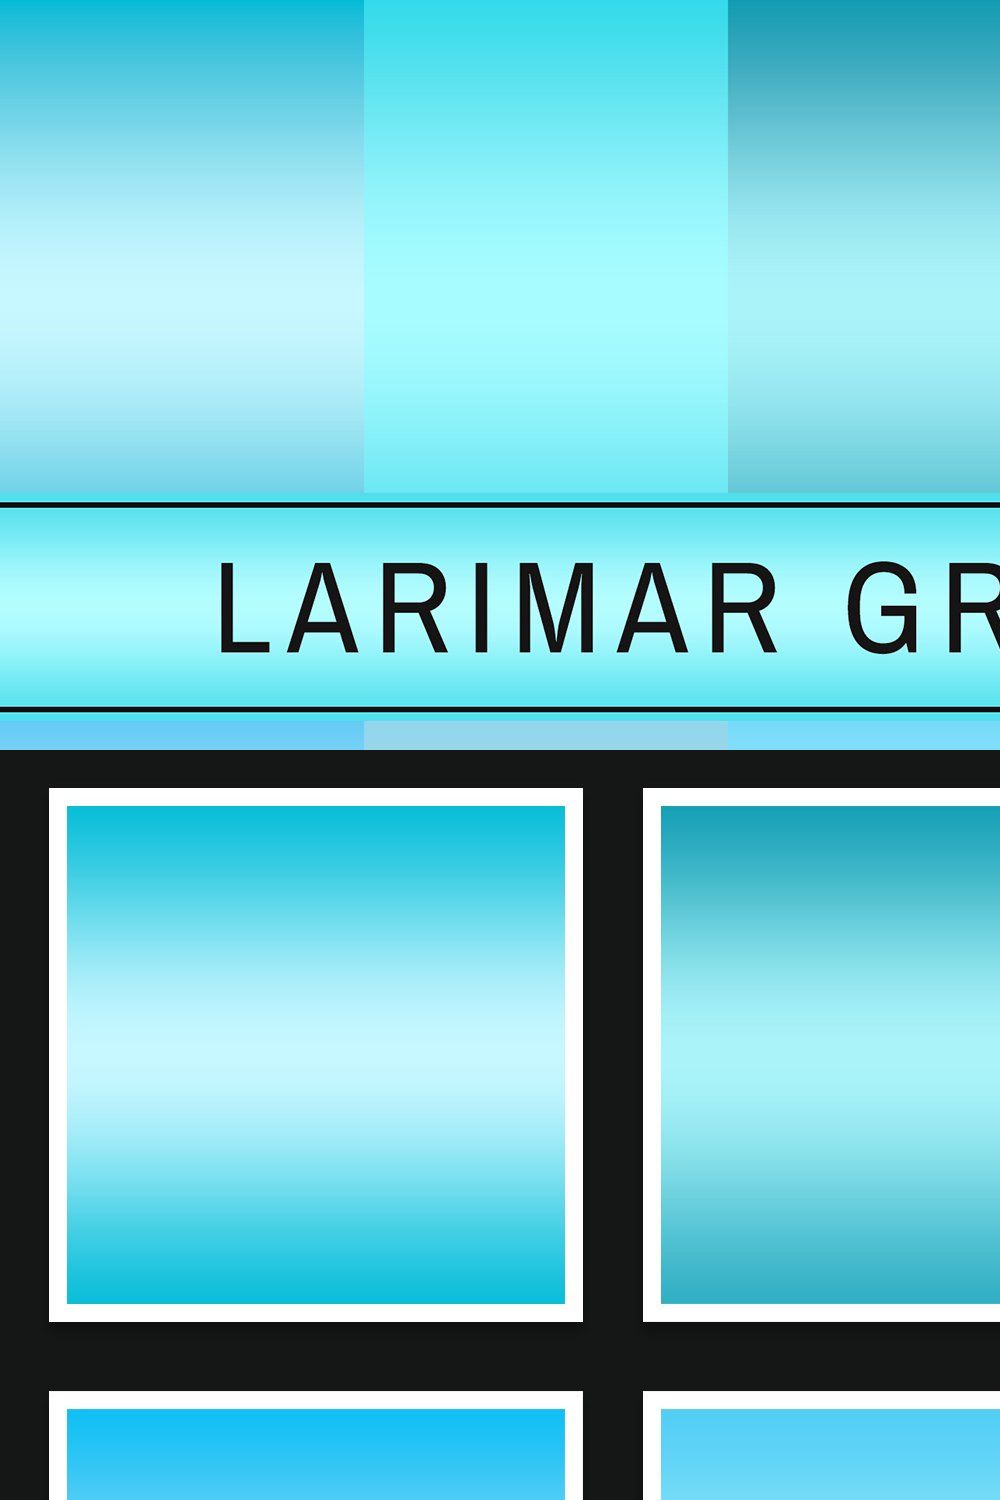 Larimar Gradients pinterest preview image.